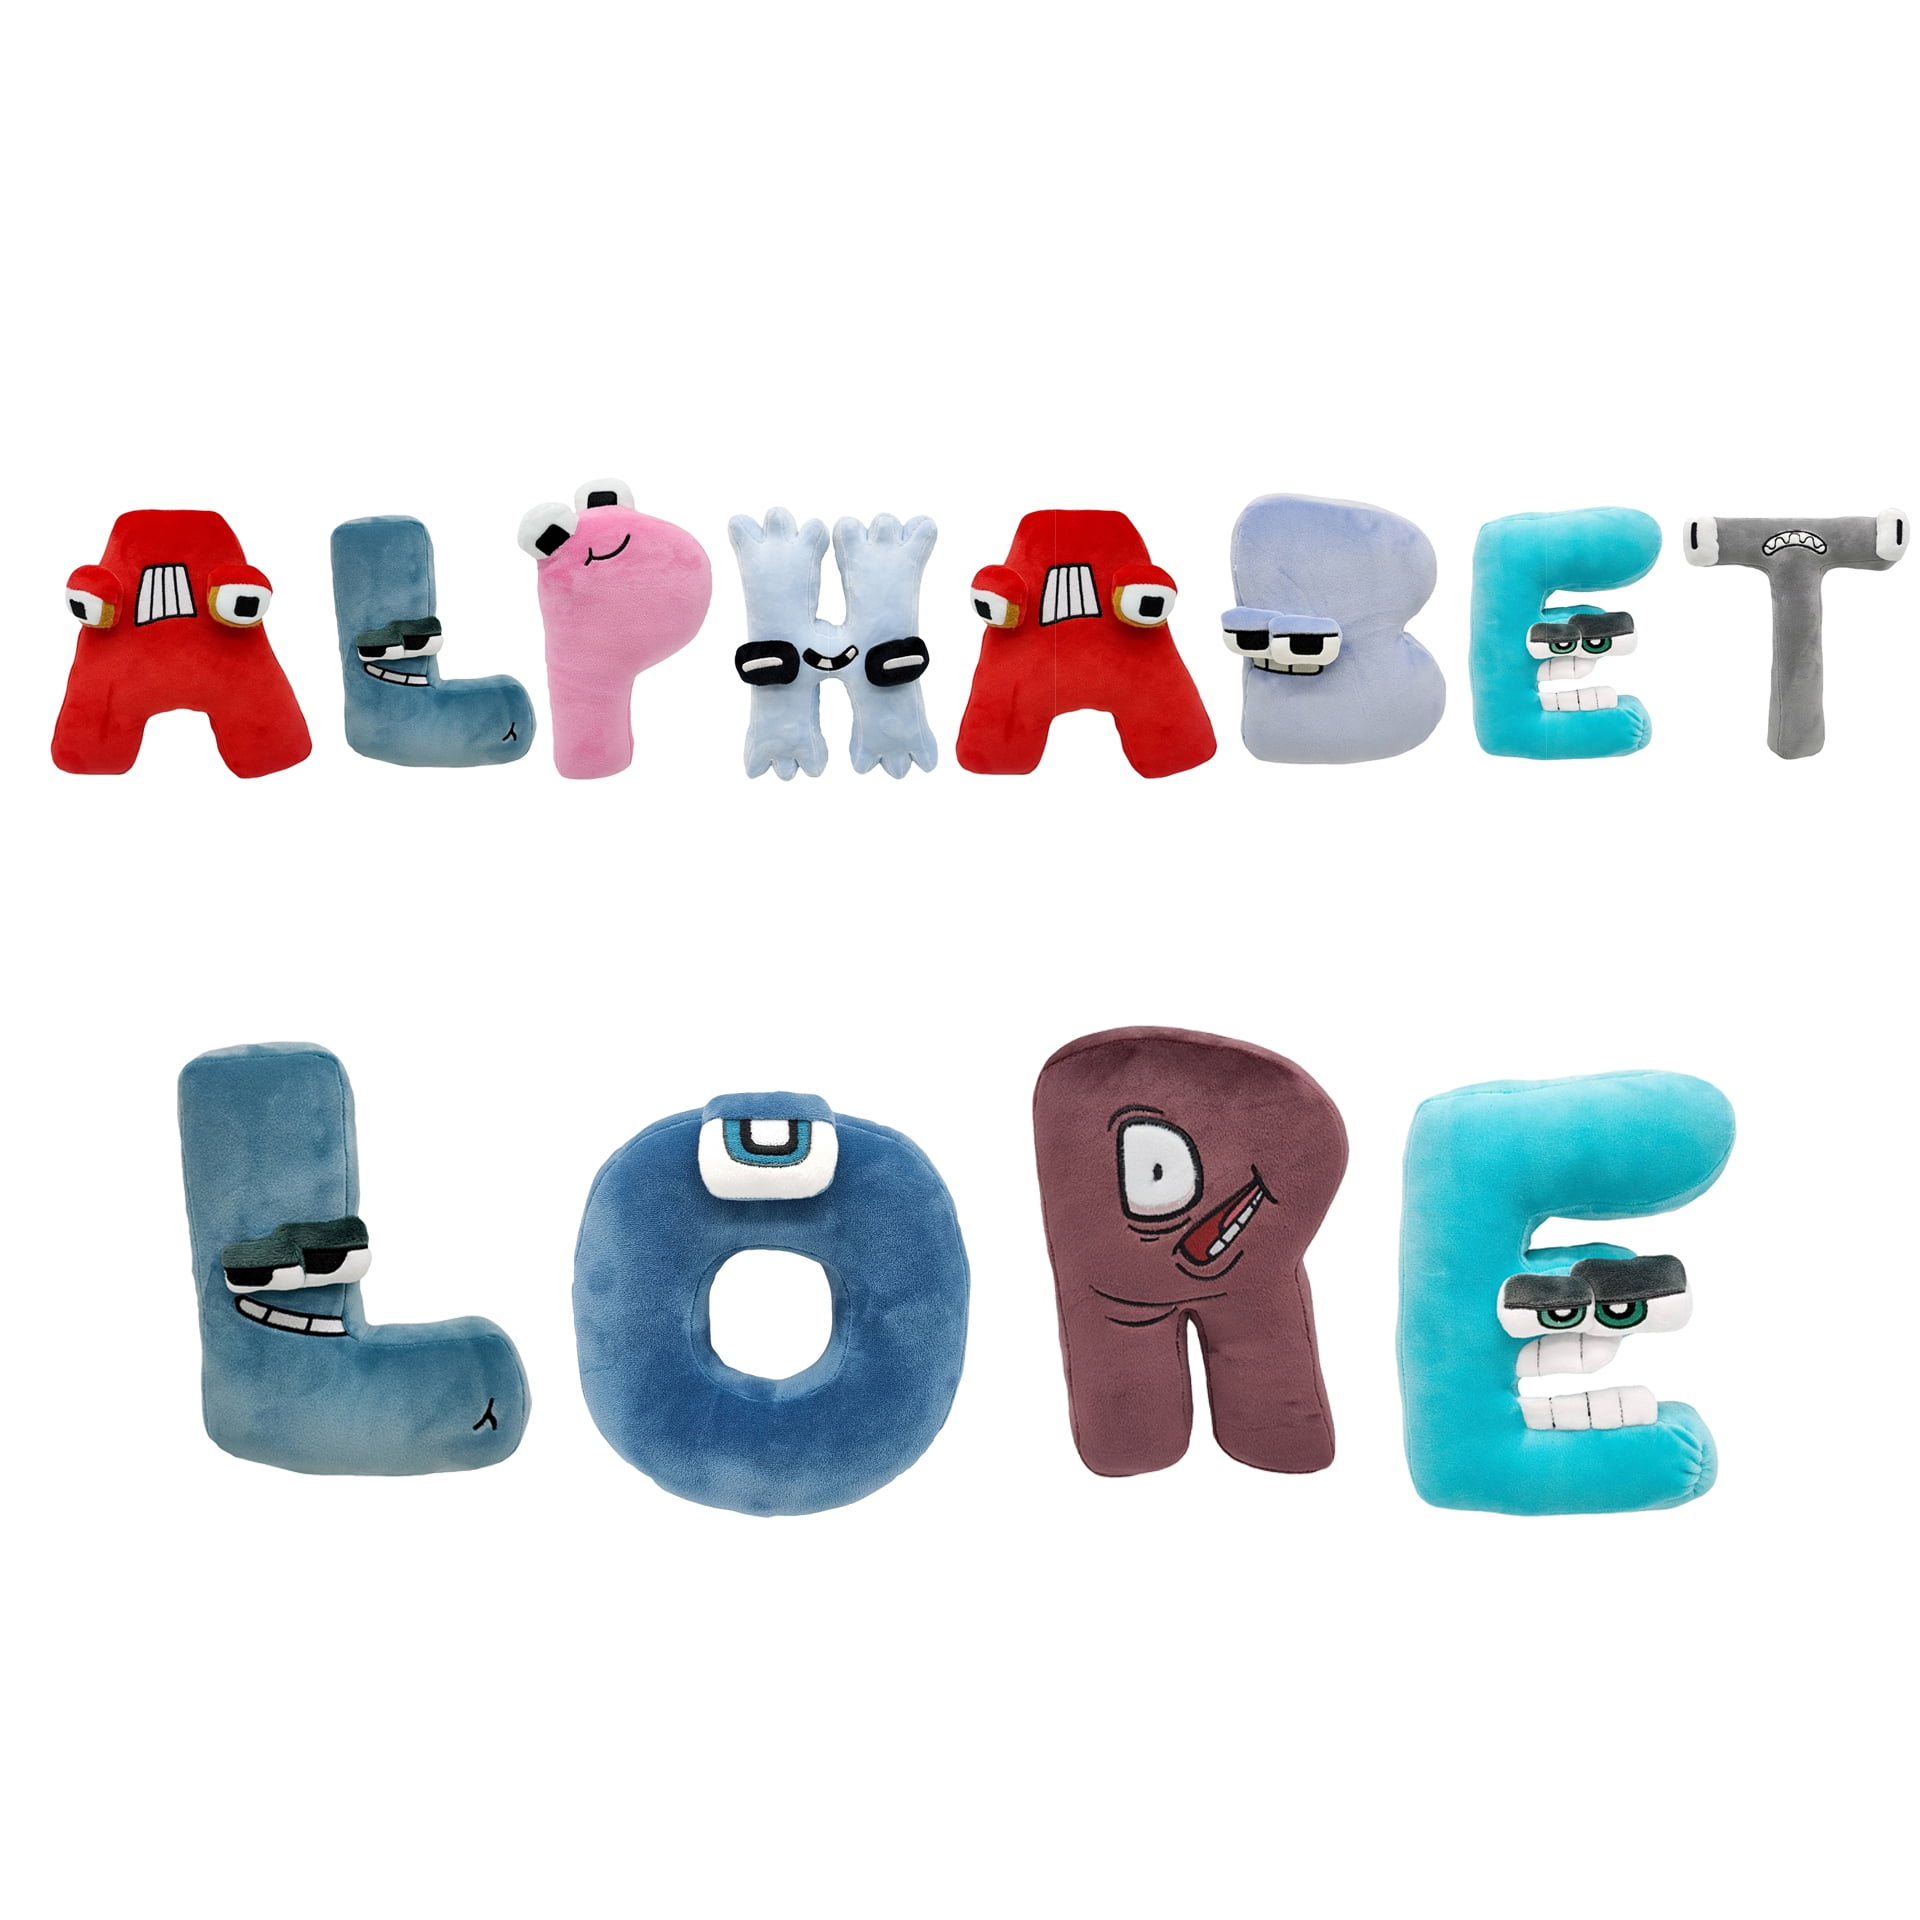 26 Letter Alphabet Lore Plush Toy Alphabet Lore But are Plush Toy